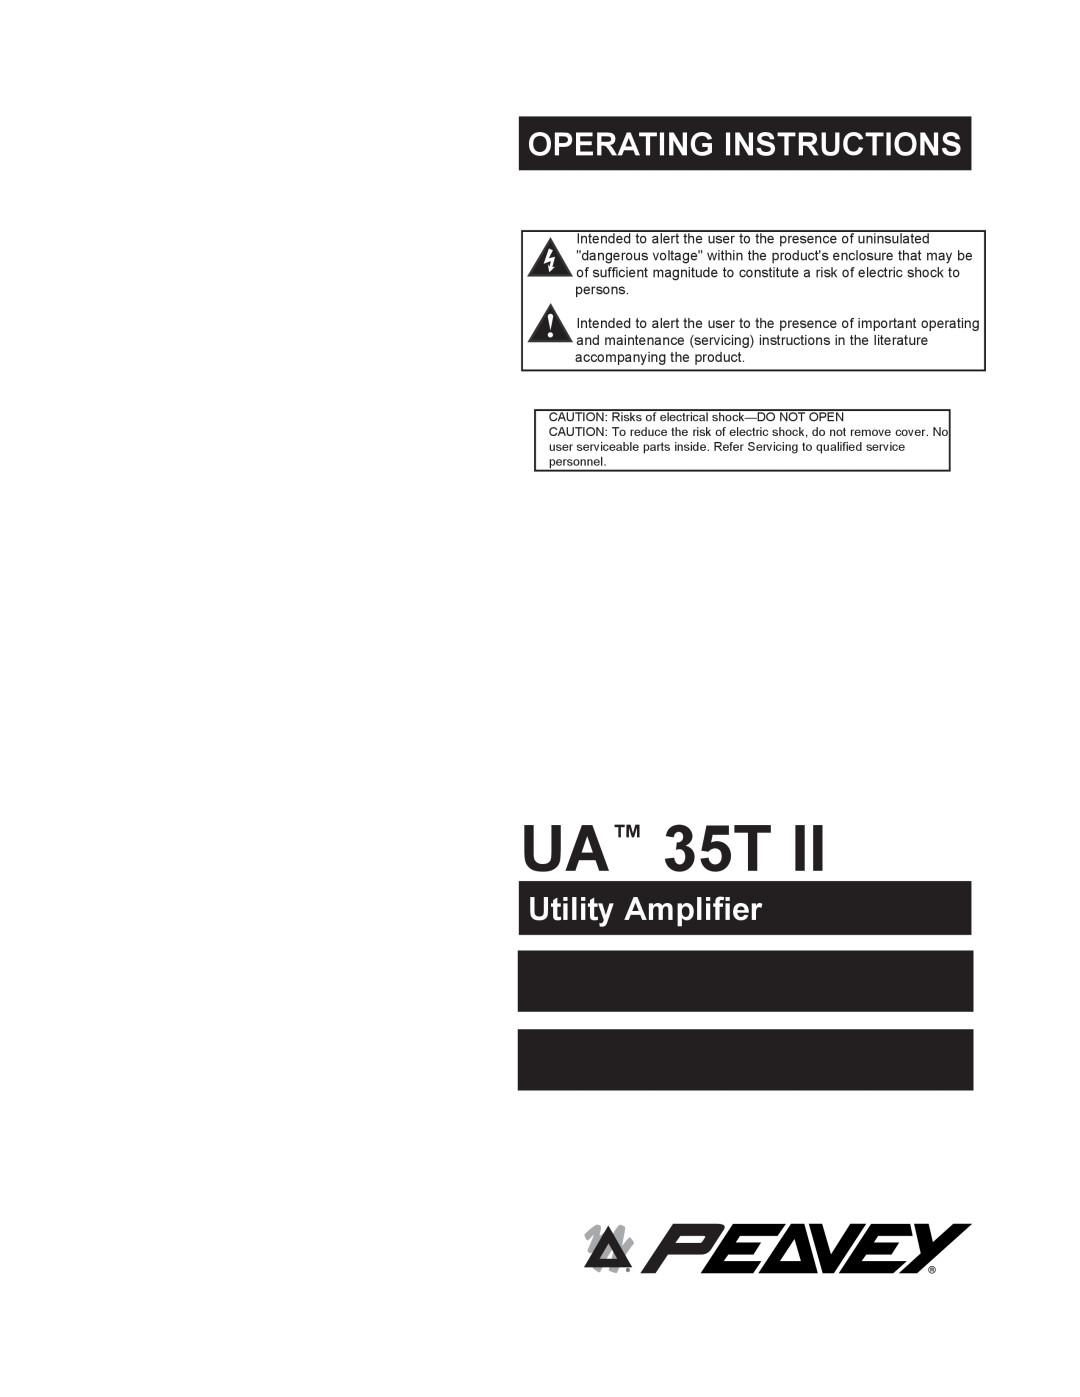 Peavey UA 35T II user service UAª 35T, Operating Instructions, Utility Amplifier 